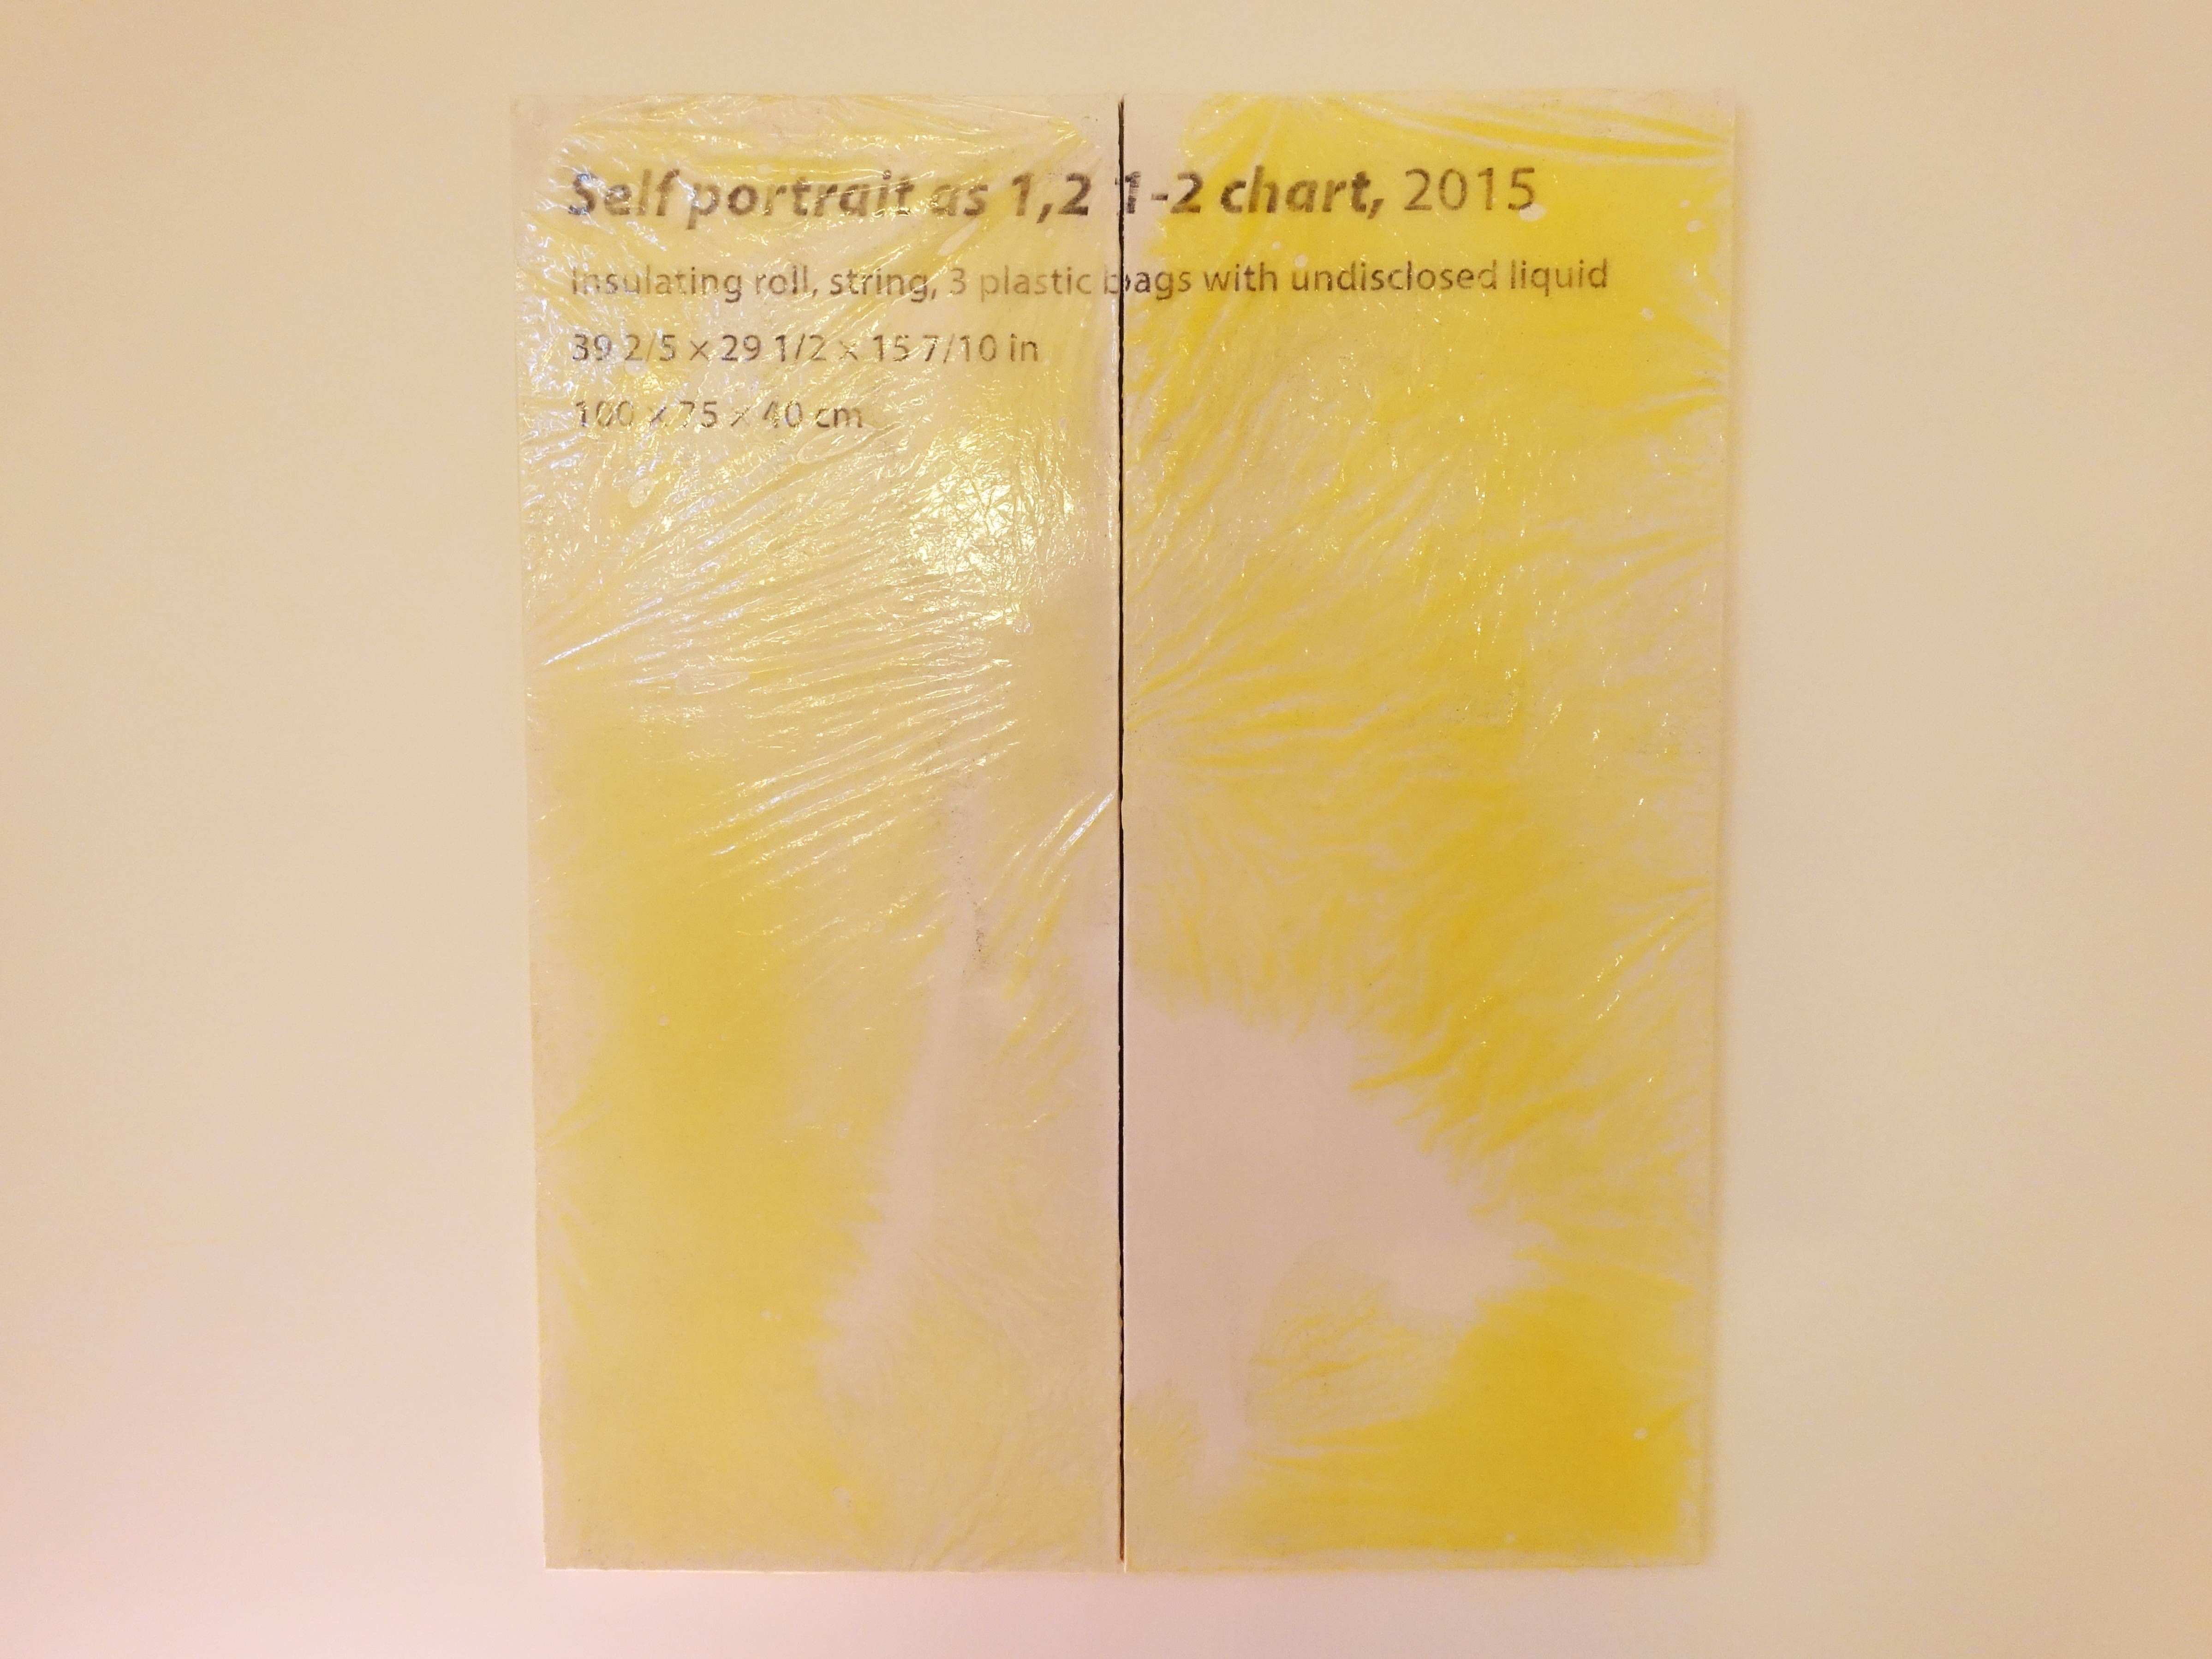 羅智信，《Self portrait as 1,2 1-2 chat 》，80 x 100 cm，畫布、碳粉、樹脂、染料，2019。